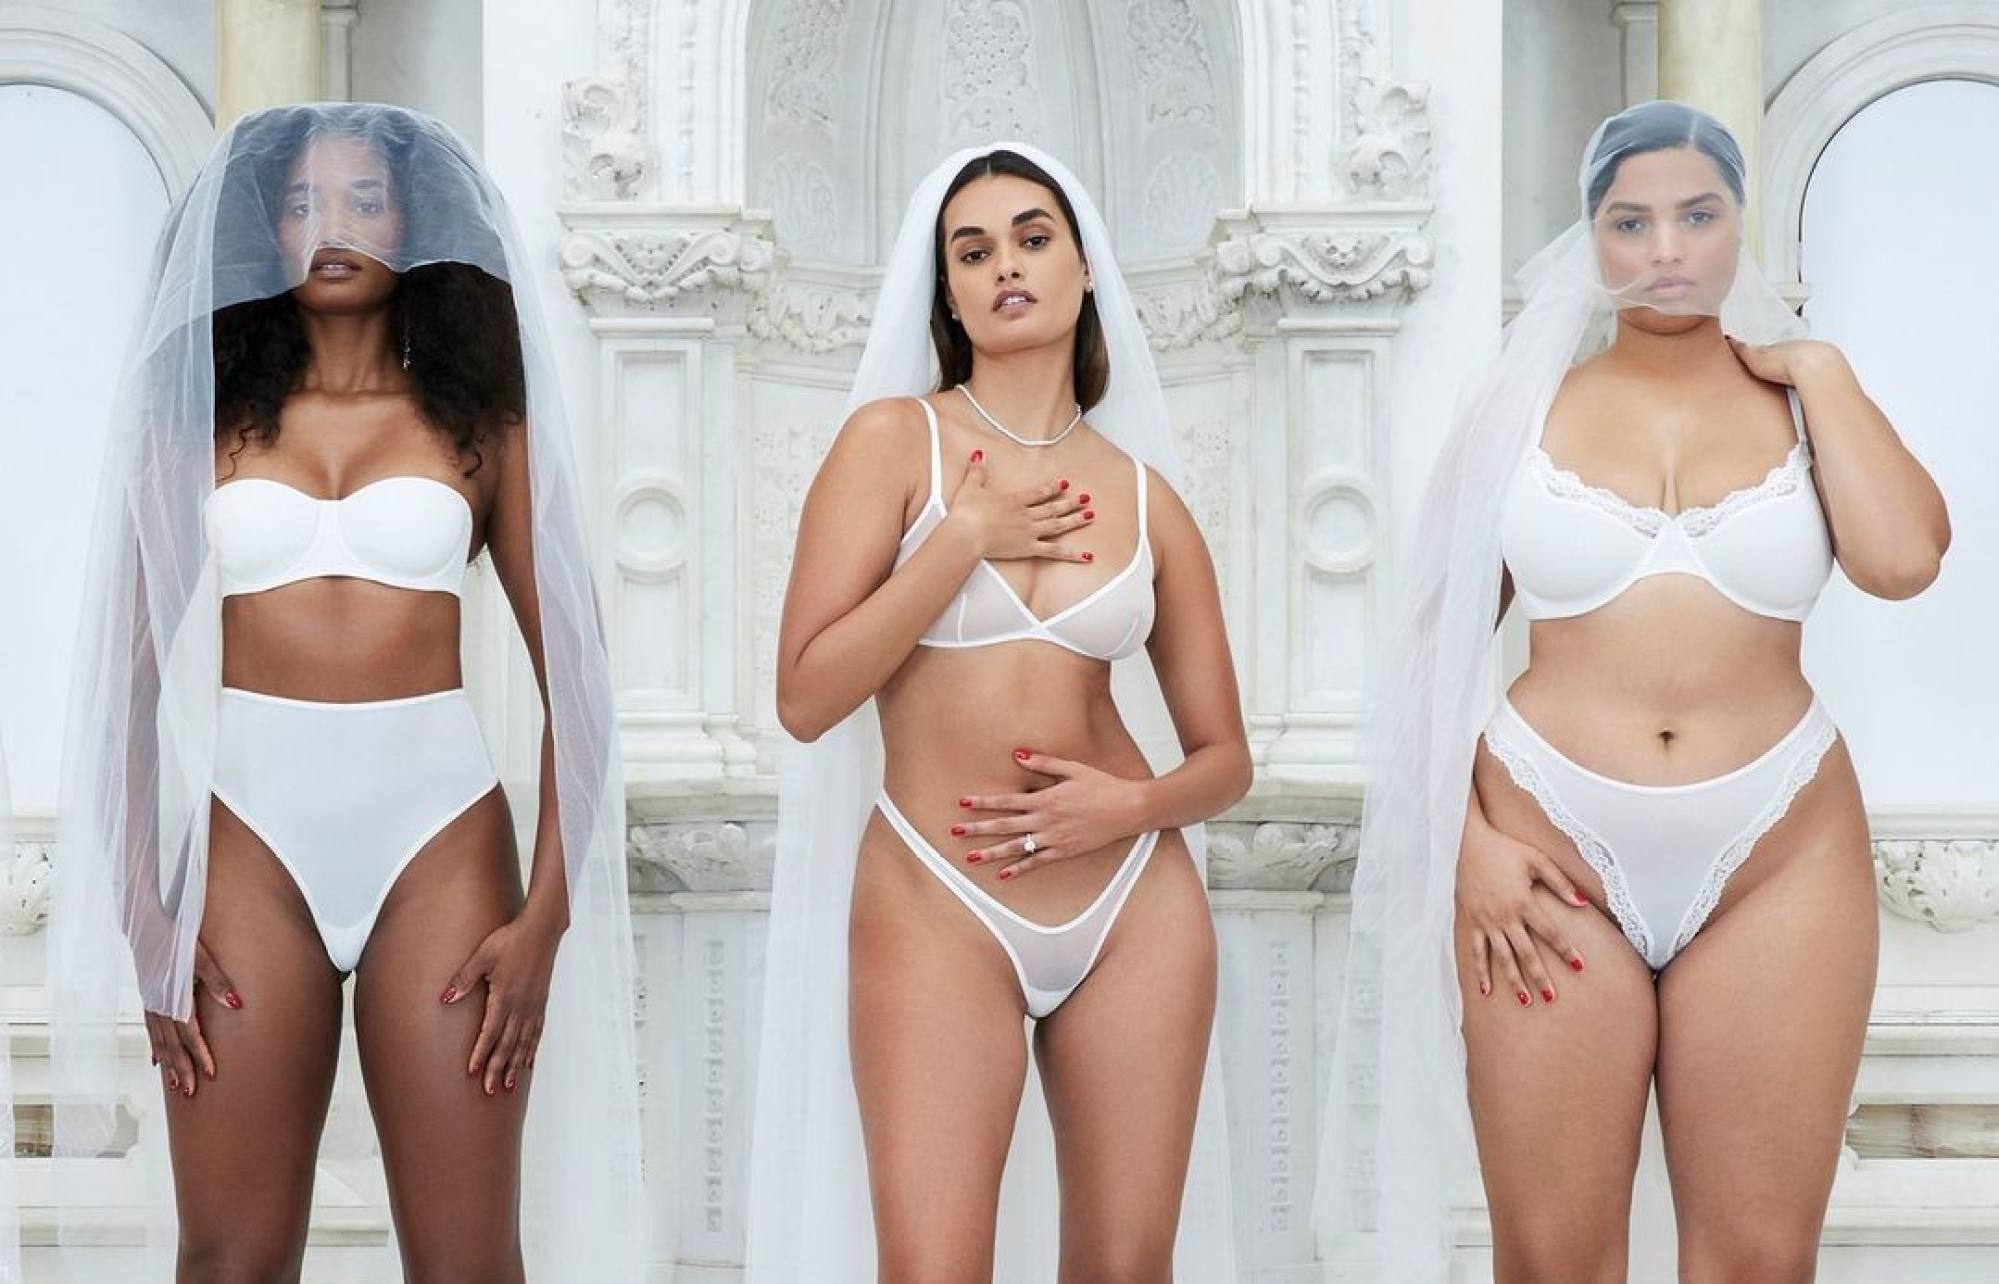 SZA is the new face of Kim Kardashian's Skims brand